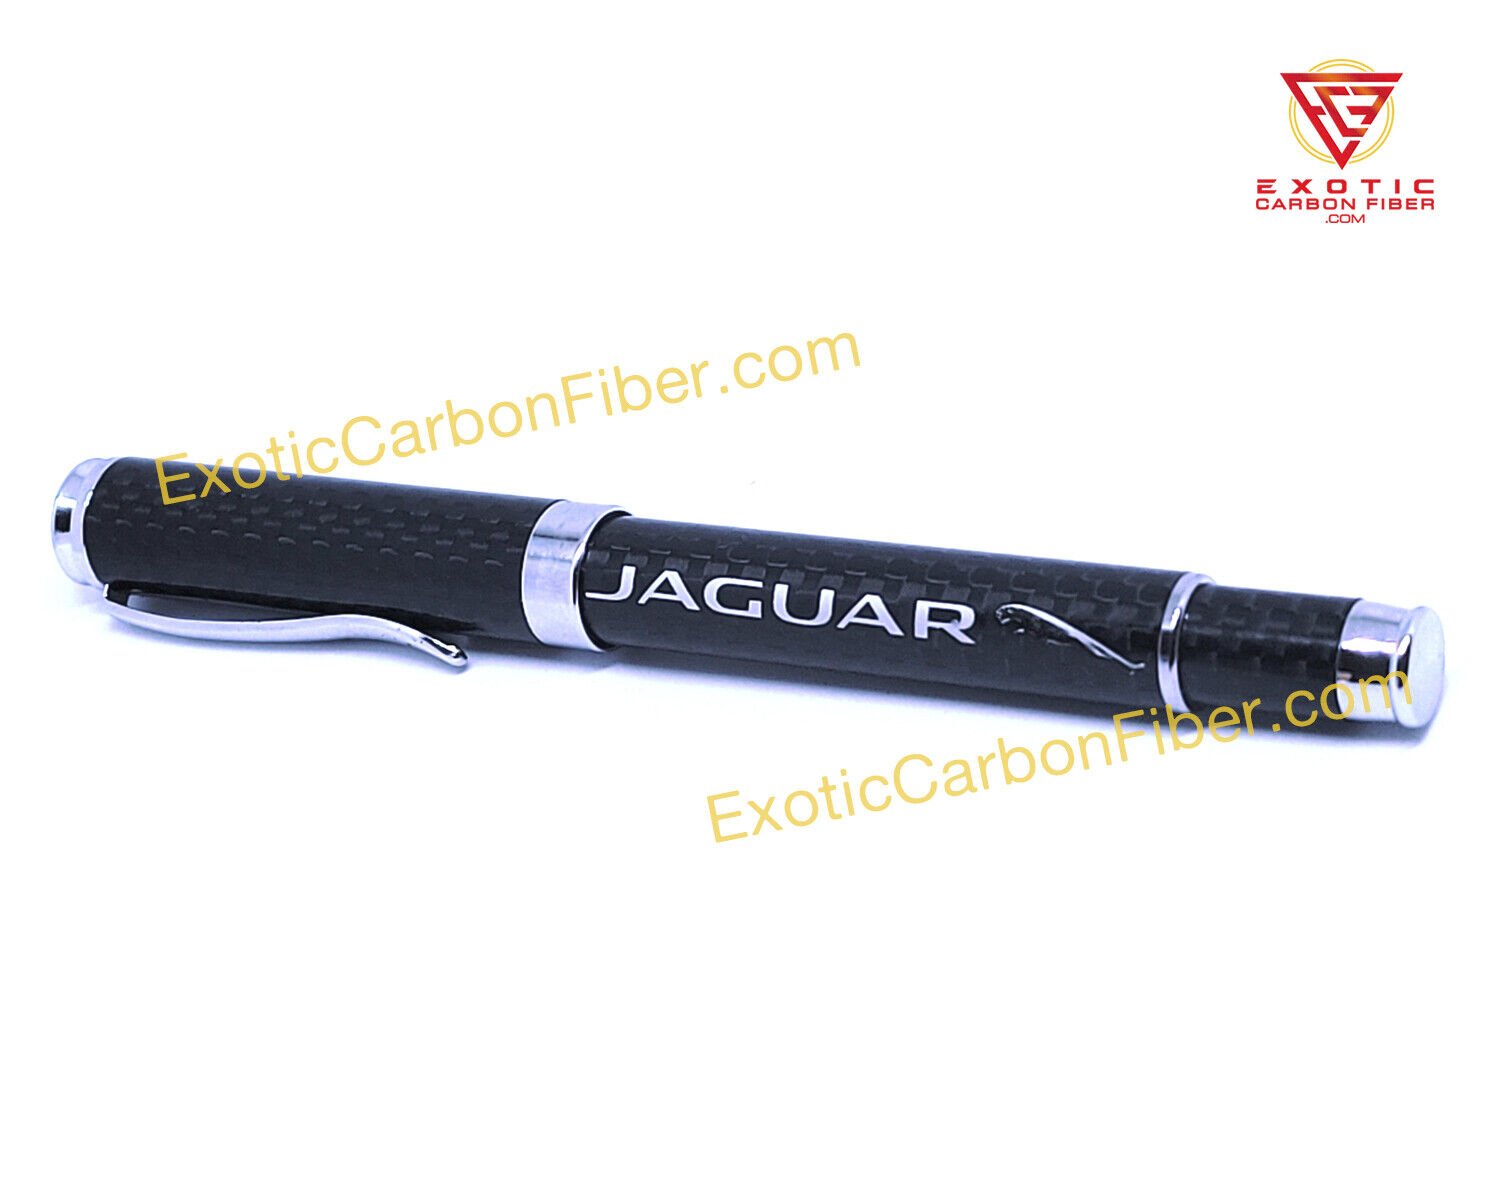 Jaguar Silver Text and  Logo Carbon Fiber Ballpoint Pen - GREAT GIFT